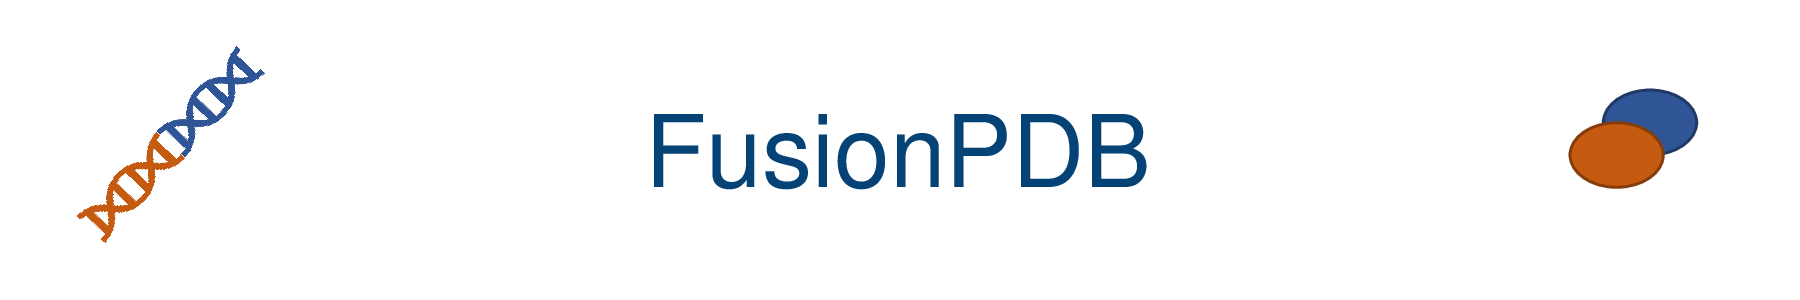 FusionPDB Logo